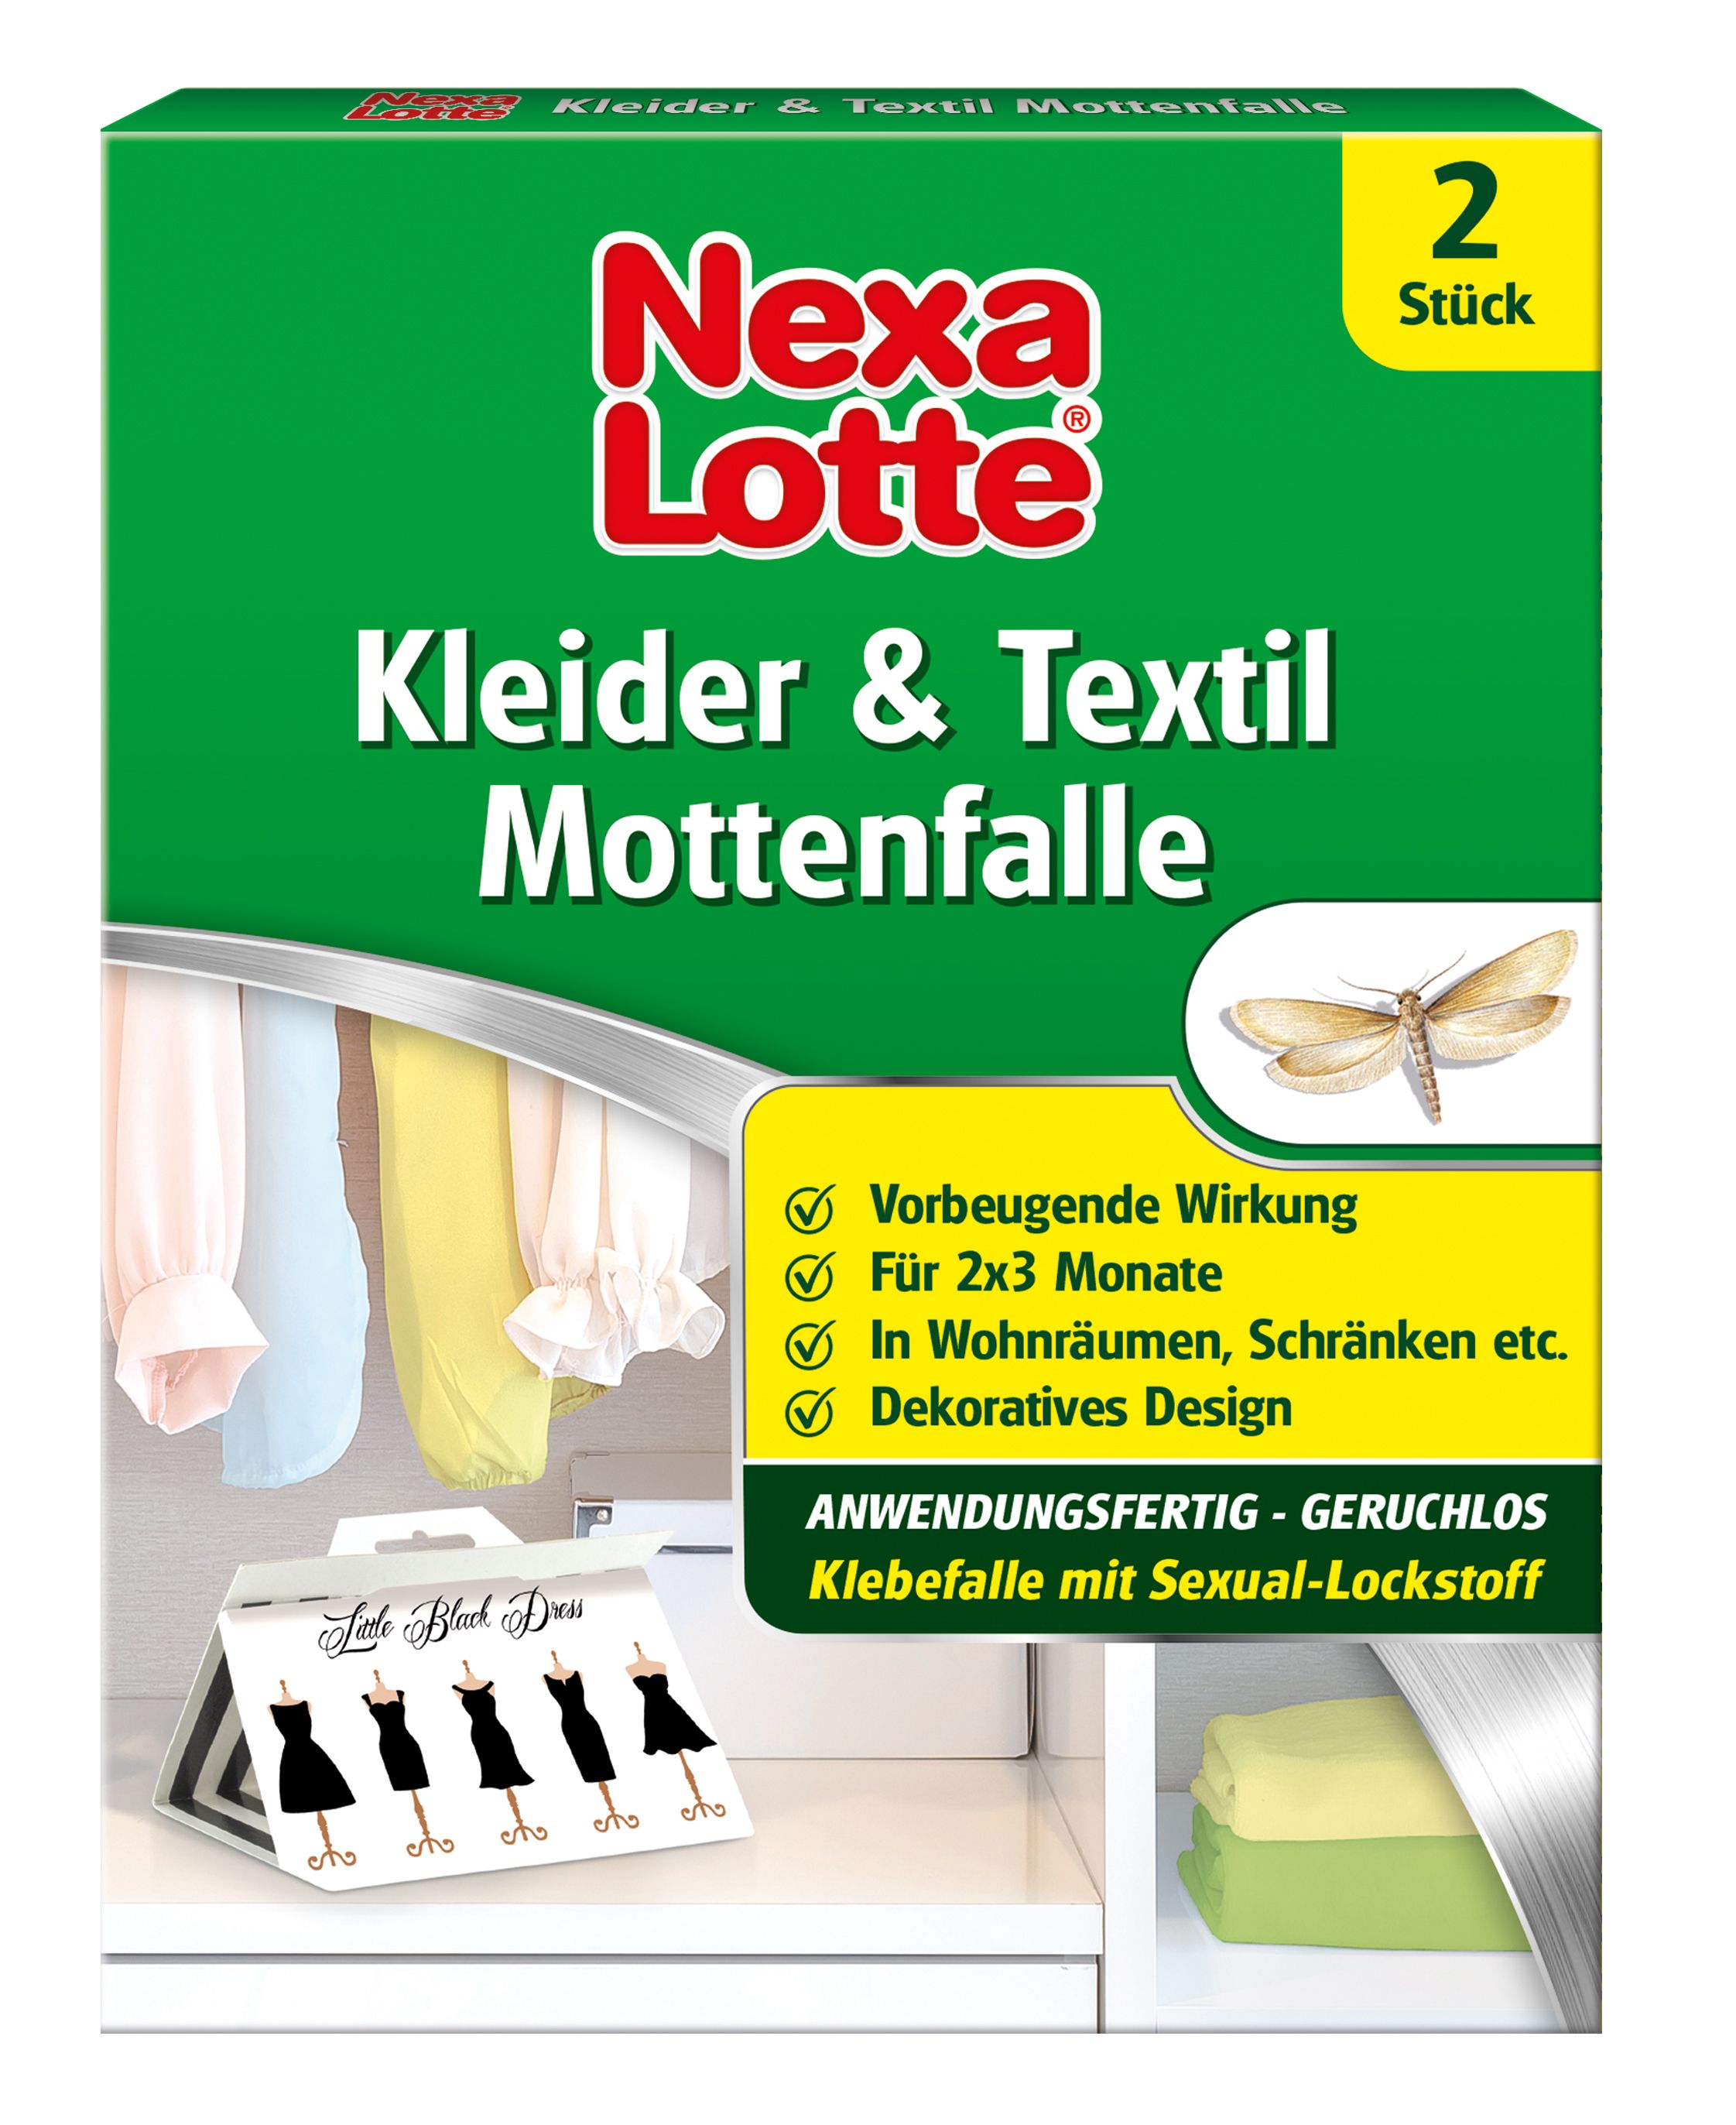 Nexa Lotte Kleider-&Textil-Mottenfalle 2 Stück